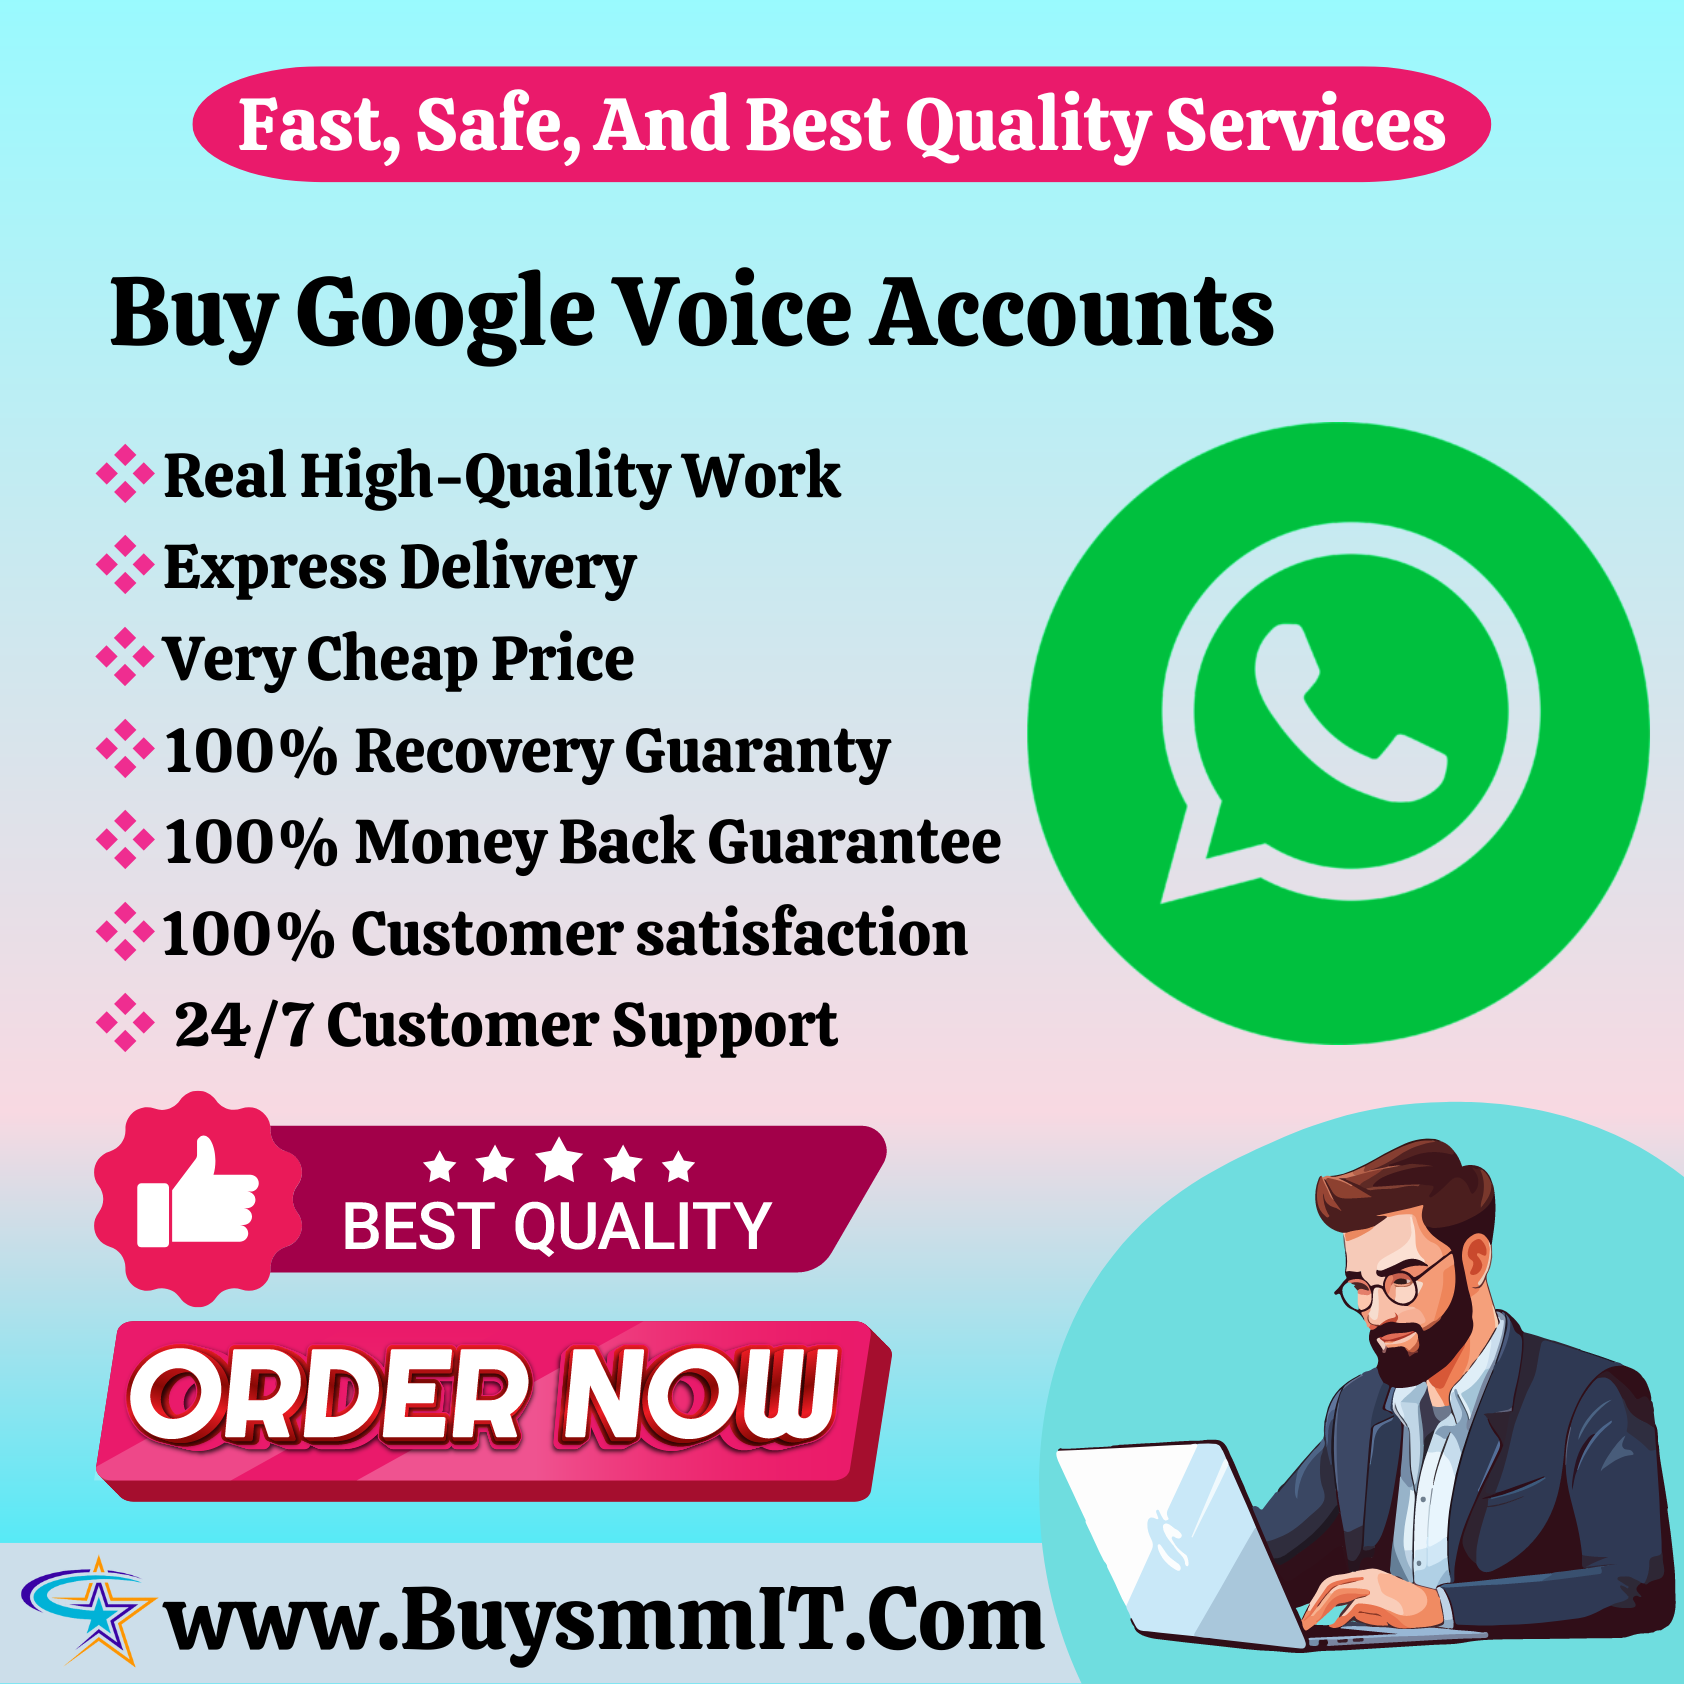 Buy Google Voice Accounts - 100% Satisfaction Guarantee